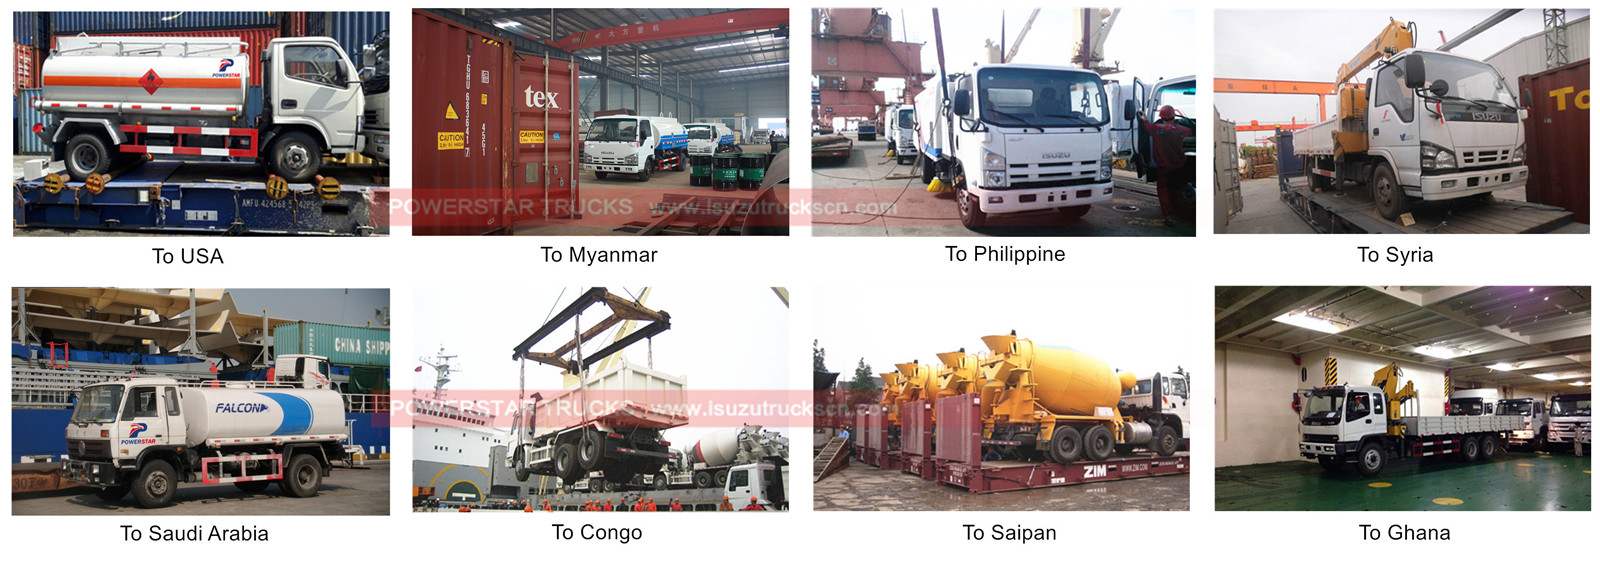 Isuzu water tanker trucks for shipping to Myanmar